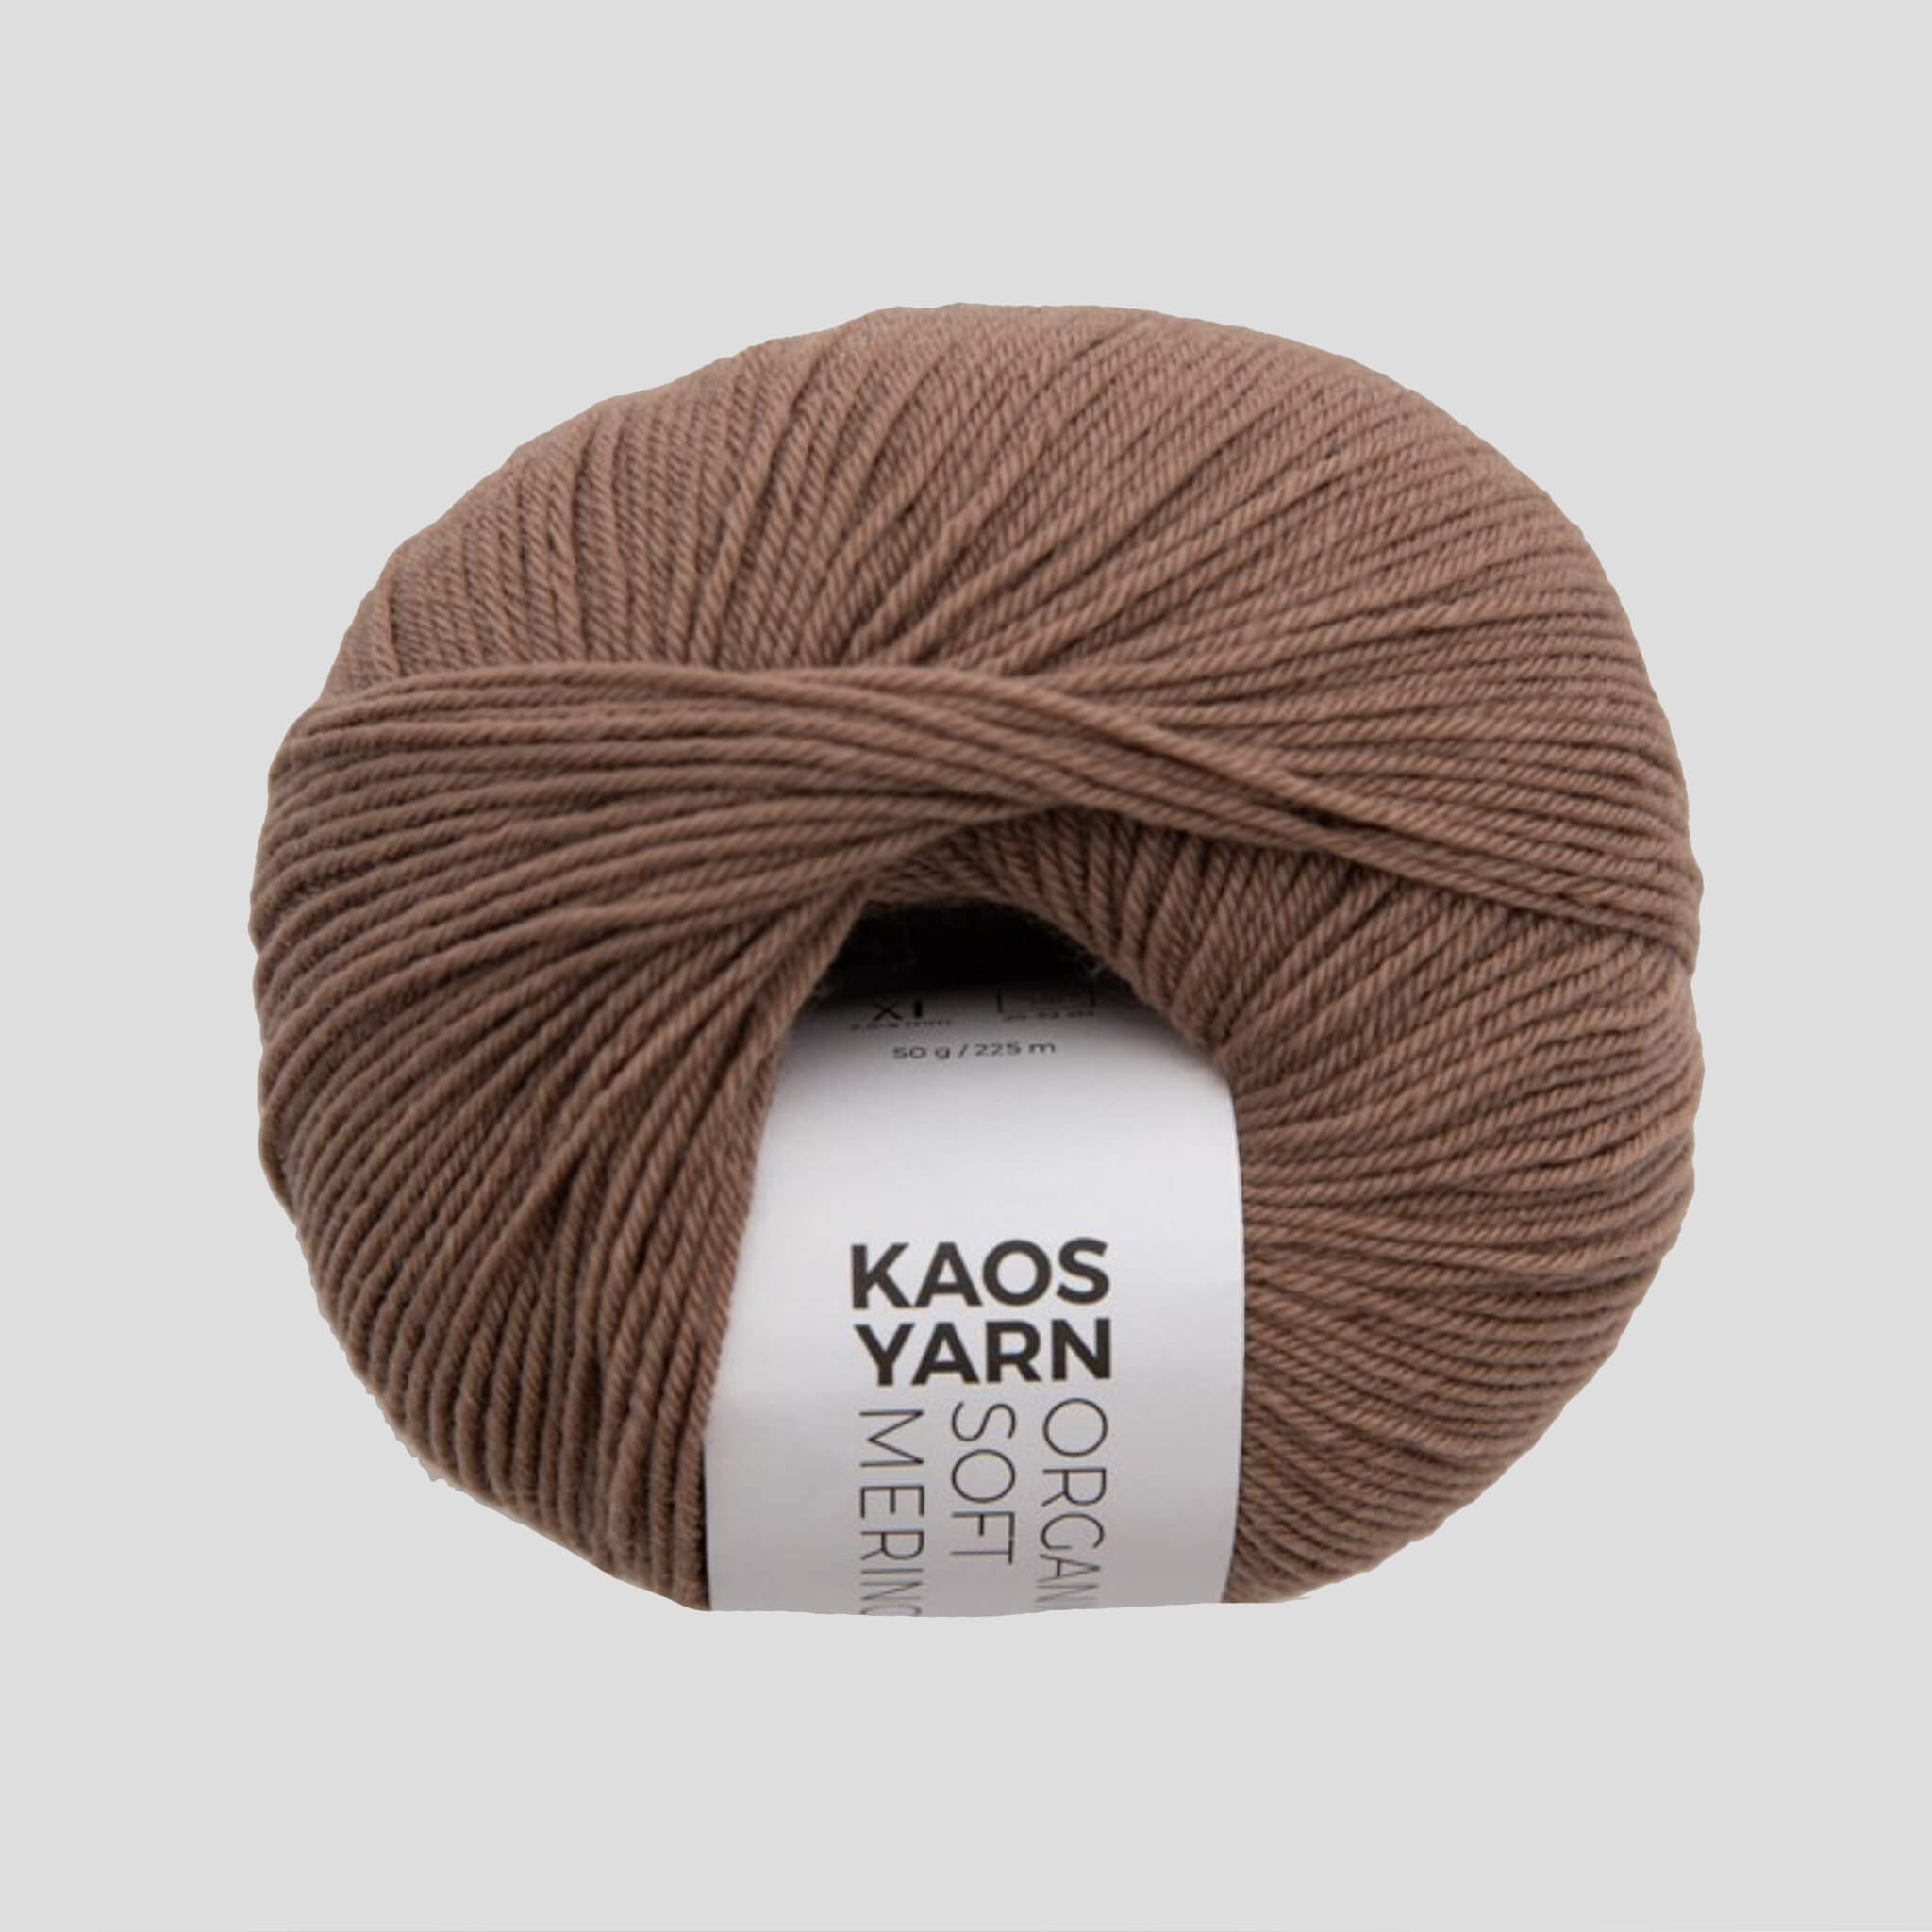 KAOS YARN I Organic Soft Merino, farve 1007 - Køb bæredygtigt garn fra Kaos Yarn